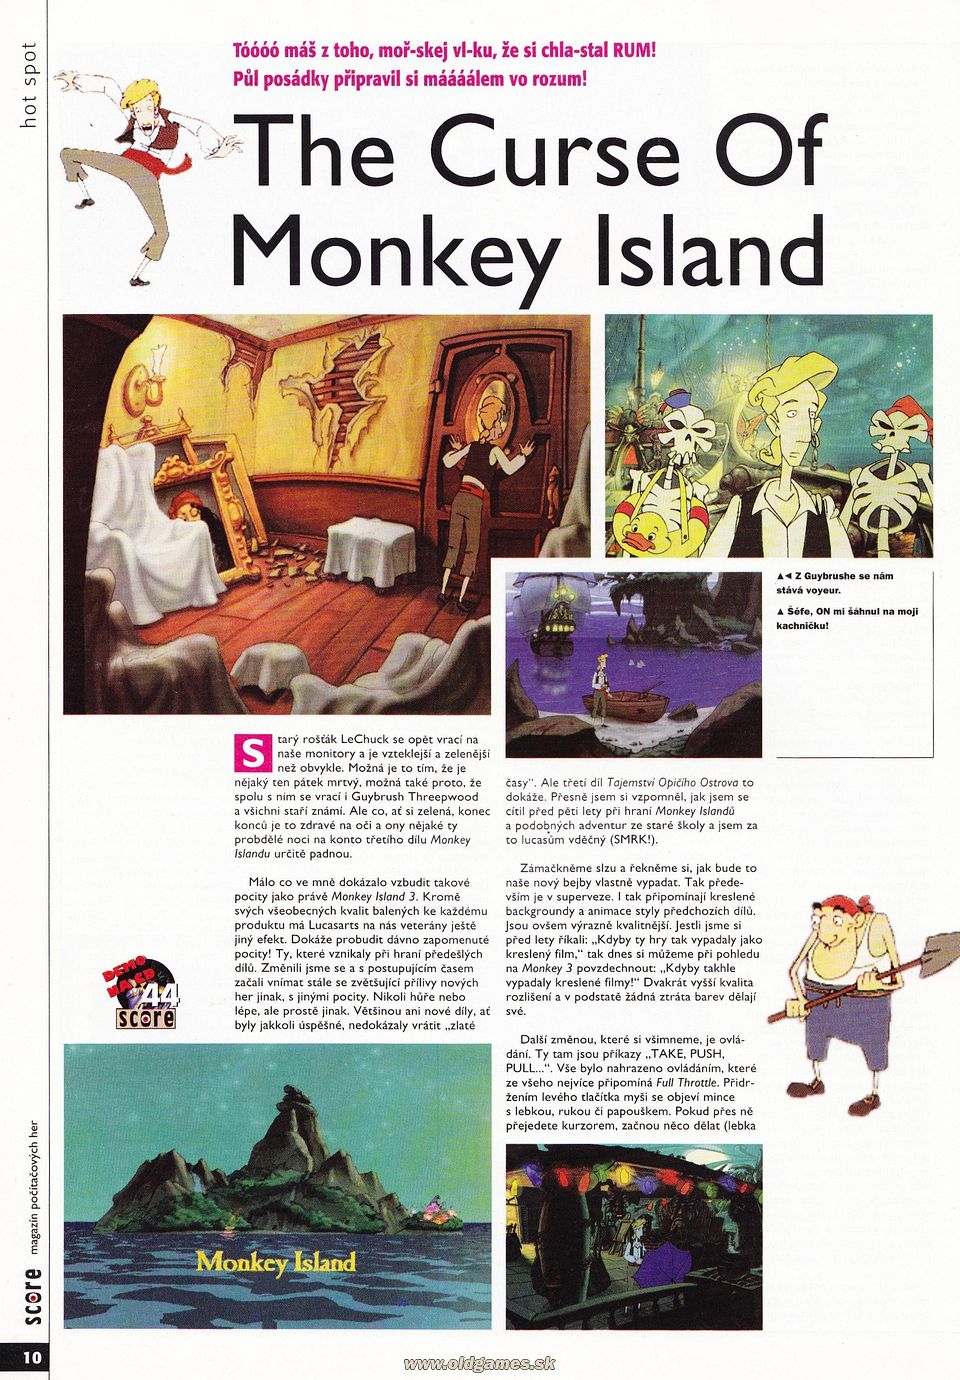 Hot spot: The Curse of Monkey Island